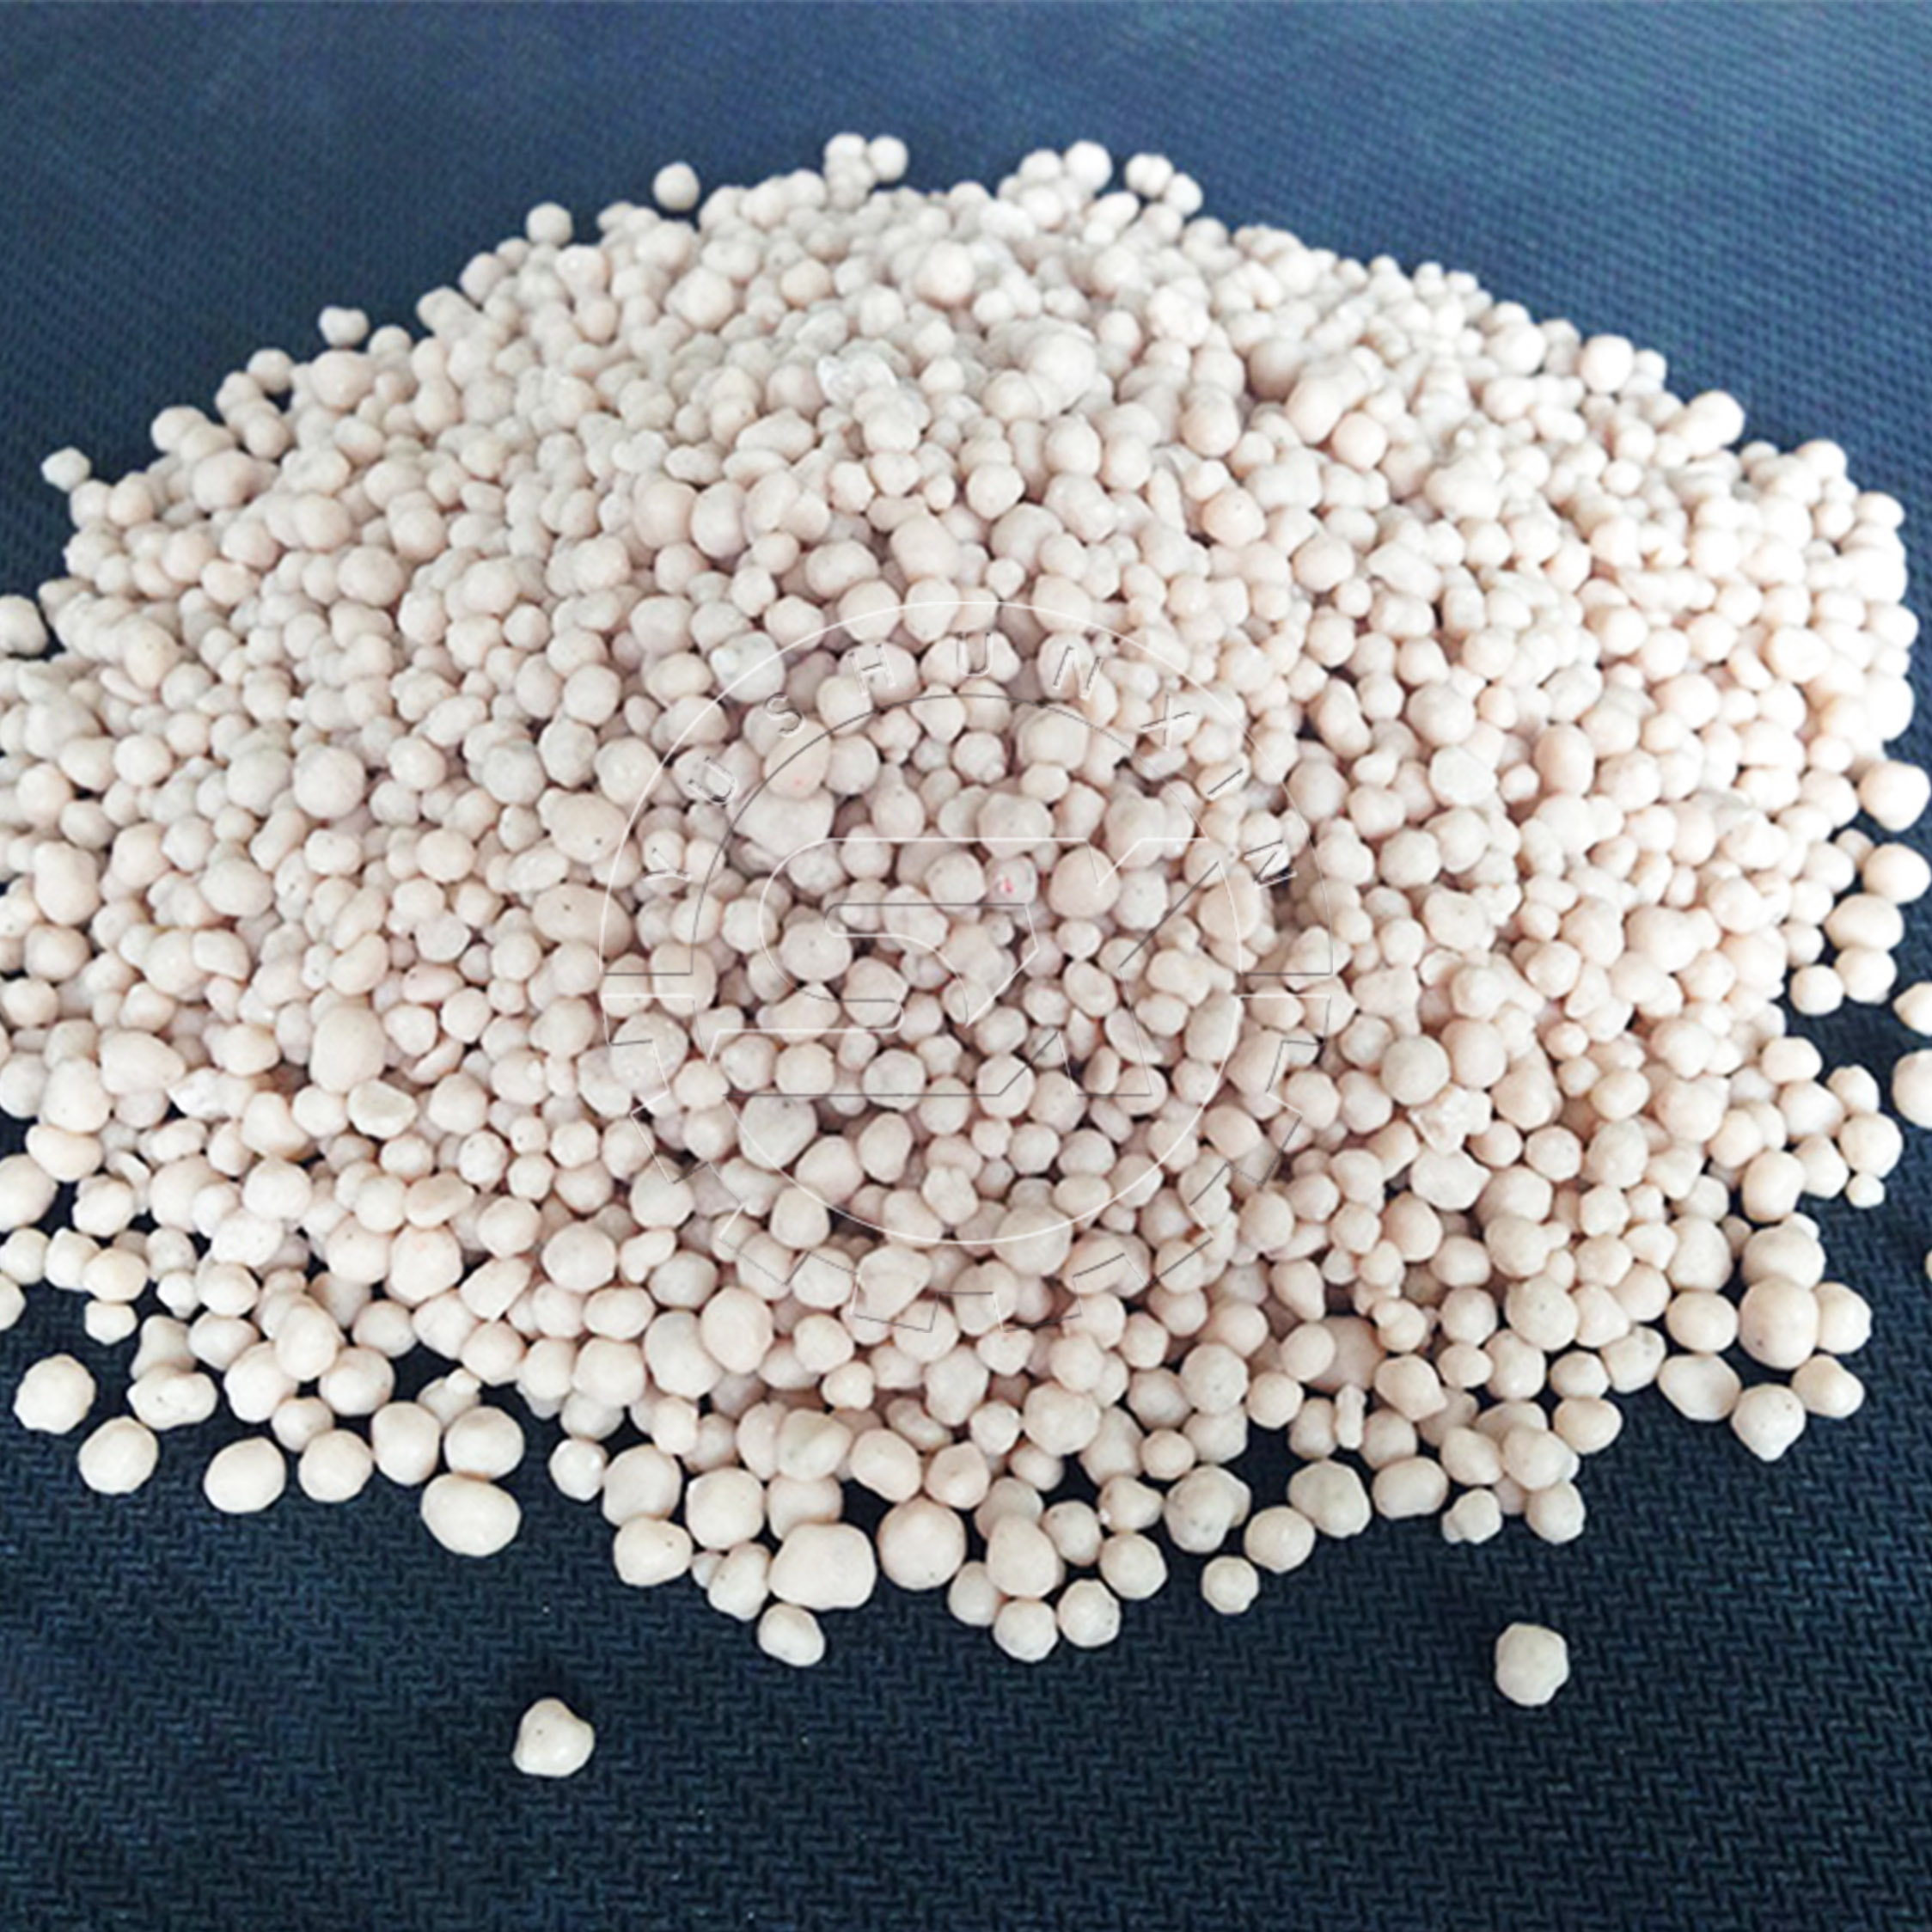 Ammonium Dihydrogen Phosphate Fertilizer Pellets